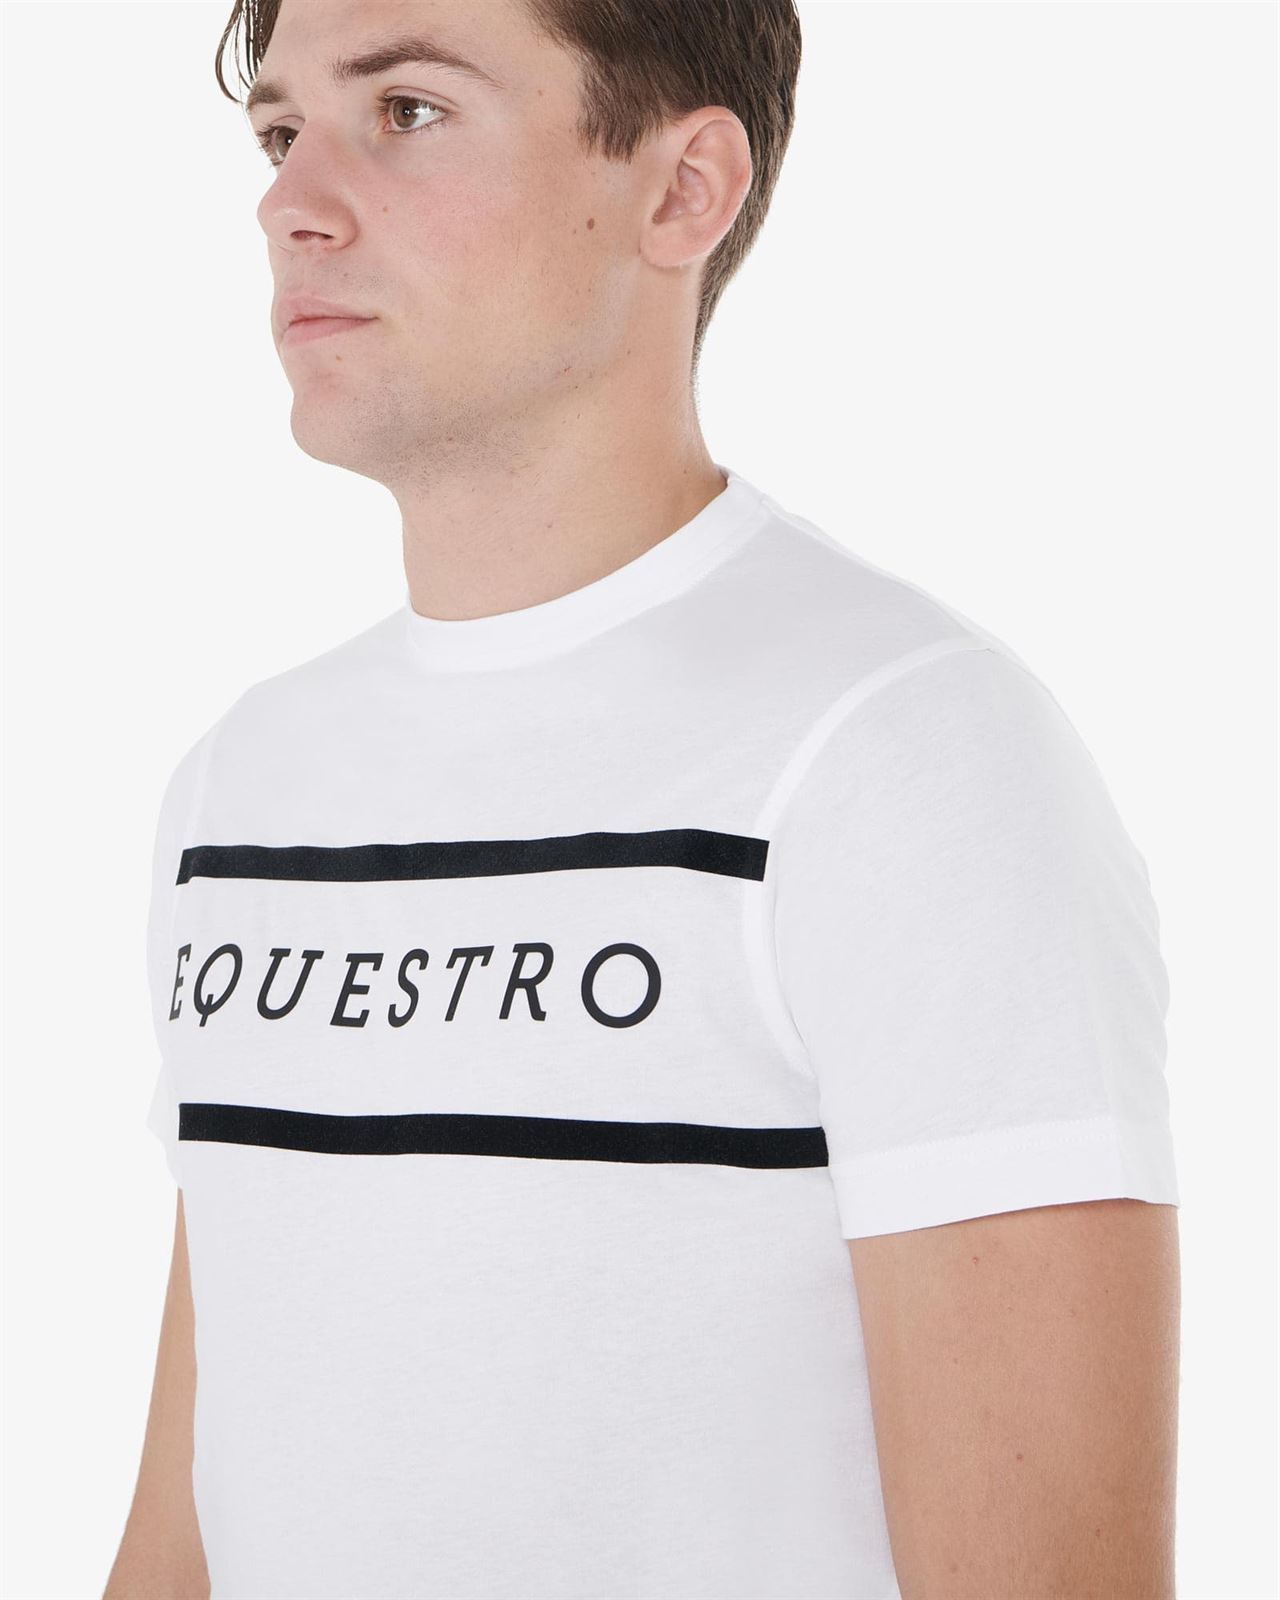 Camiseta caballero EQUESTRO color blanco/negro TALLA M - Imagen 3